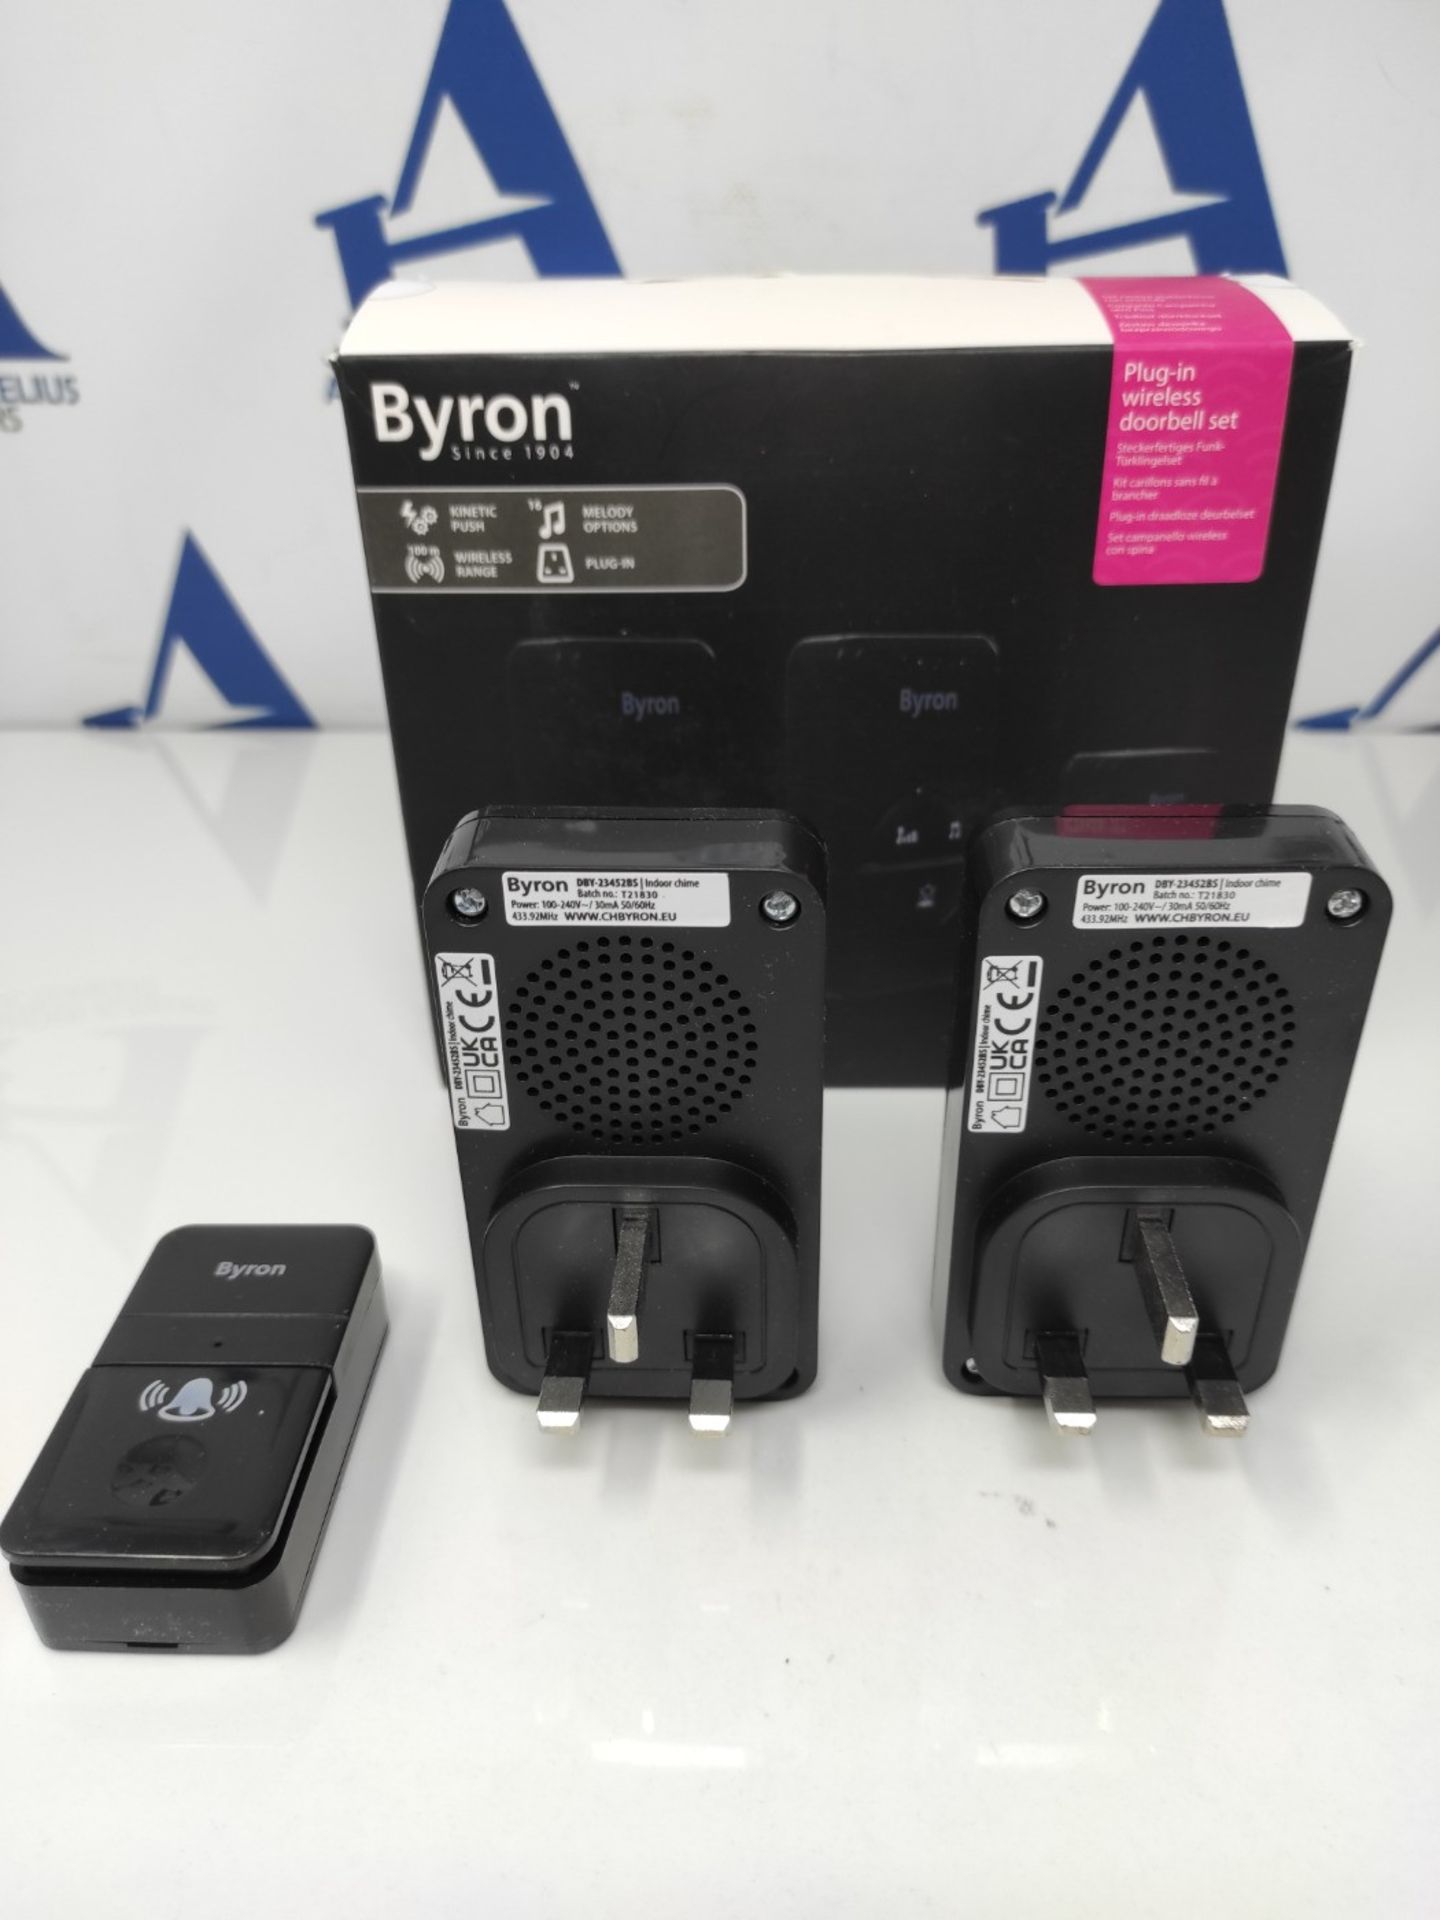 Byron DBY-23455BS Wireless Doorbell Set - 2 Plugs - Kinetic Energy - Black - Image 2 of 2